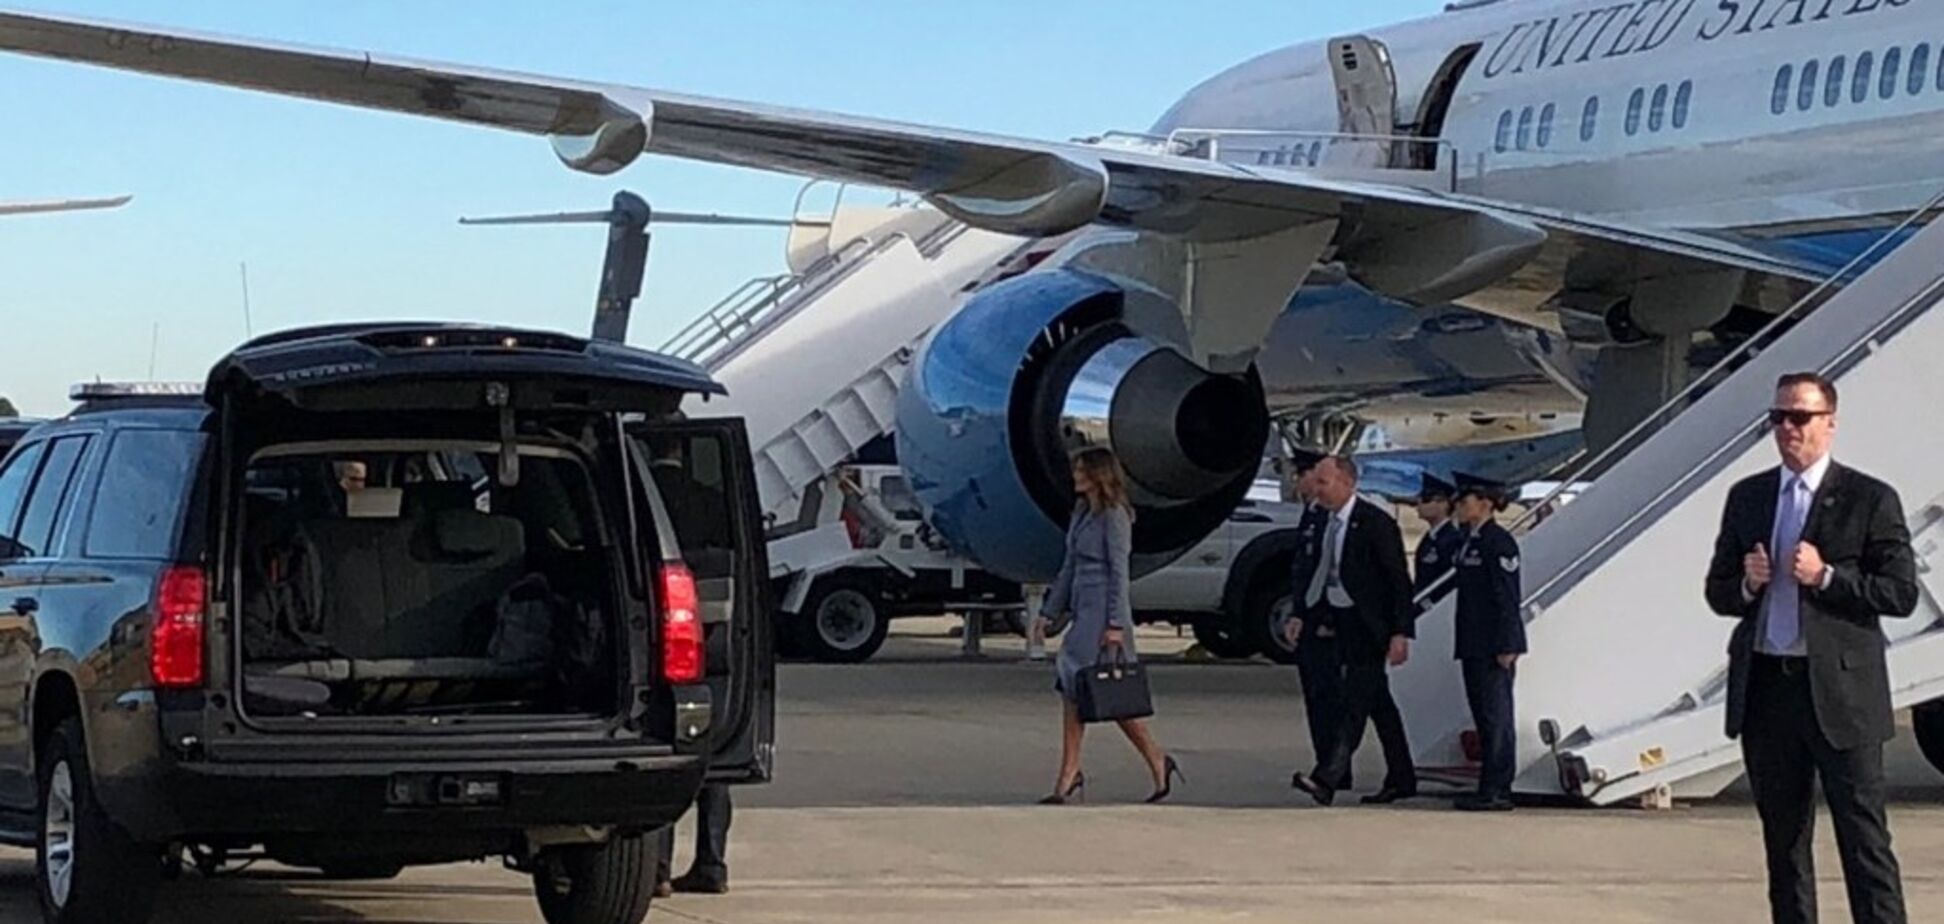 У США трапилася надзвичайна подія на борту літака з Меланією Трамп